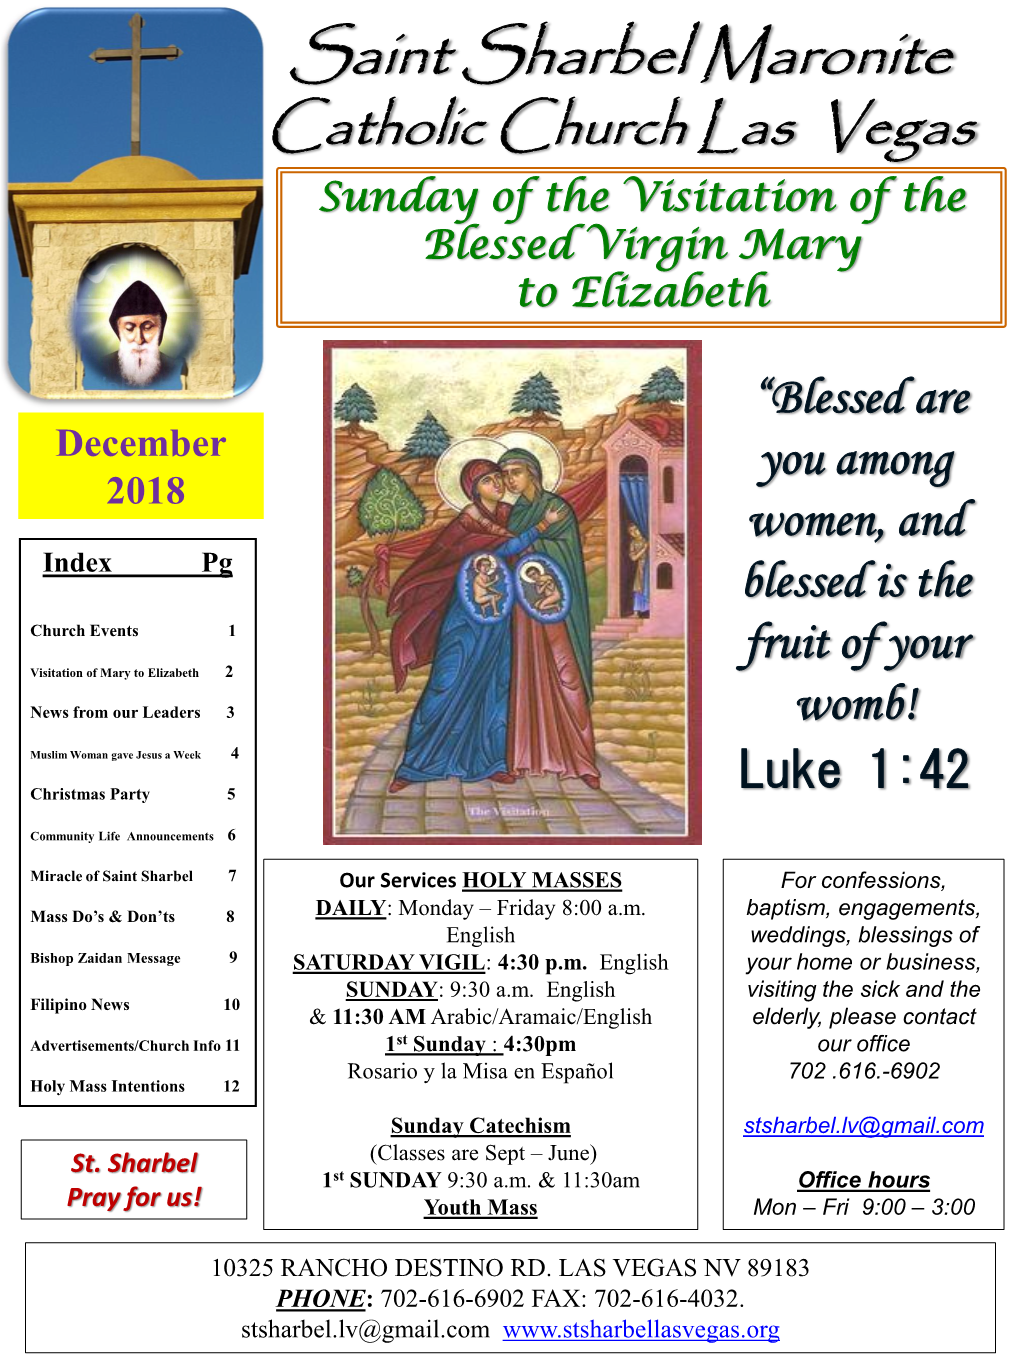 Saint Sharbel Maronite Catholic Church Las Vegas Sunday of the Visitation of the Blessed Virgin Mary to Elizabeth